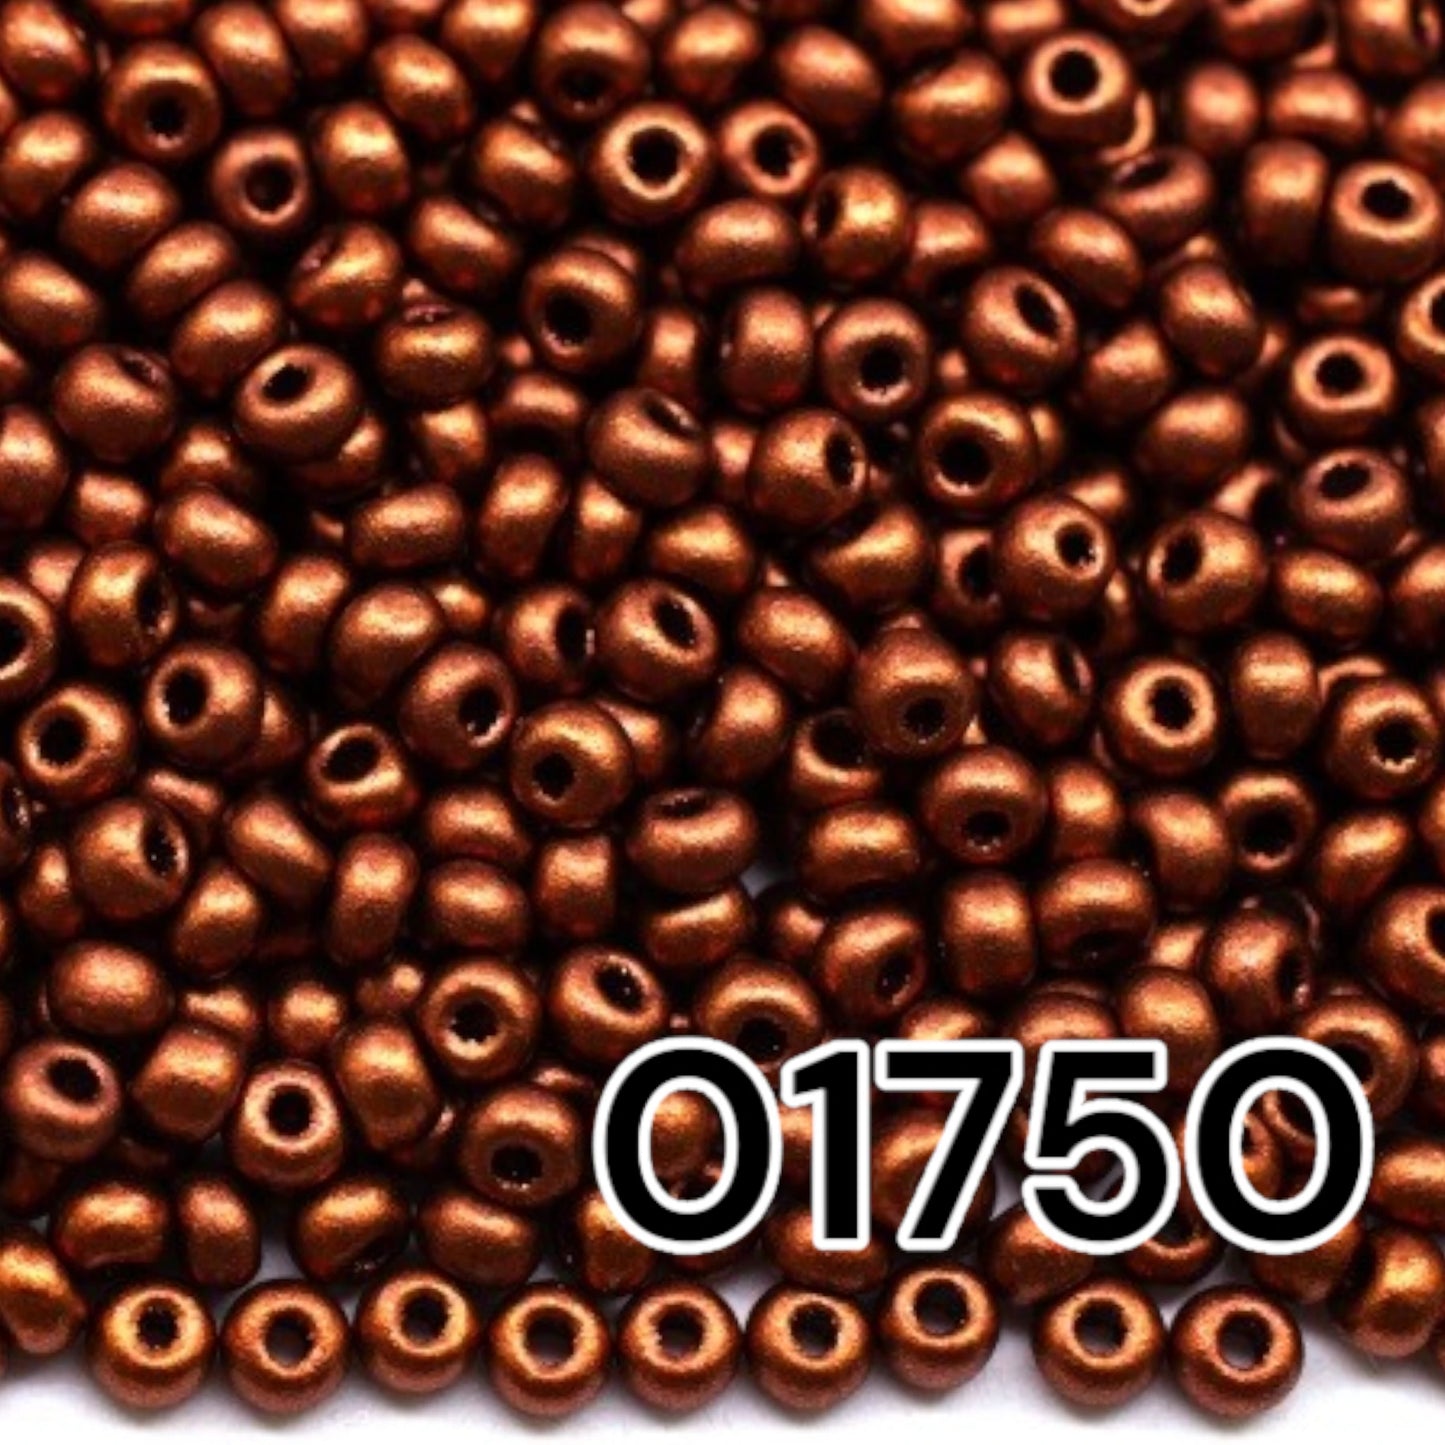 01750 Czech seed beads PRECIOSA round 10/0 Copper metallic. Metallic - Opaque Bronze.